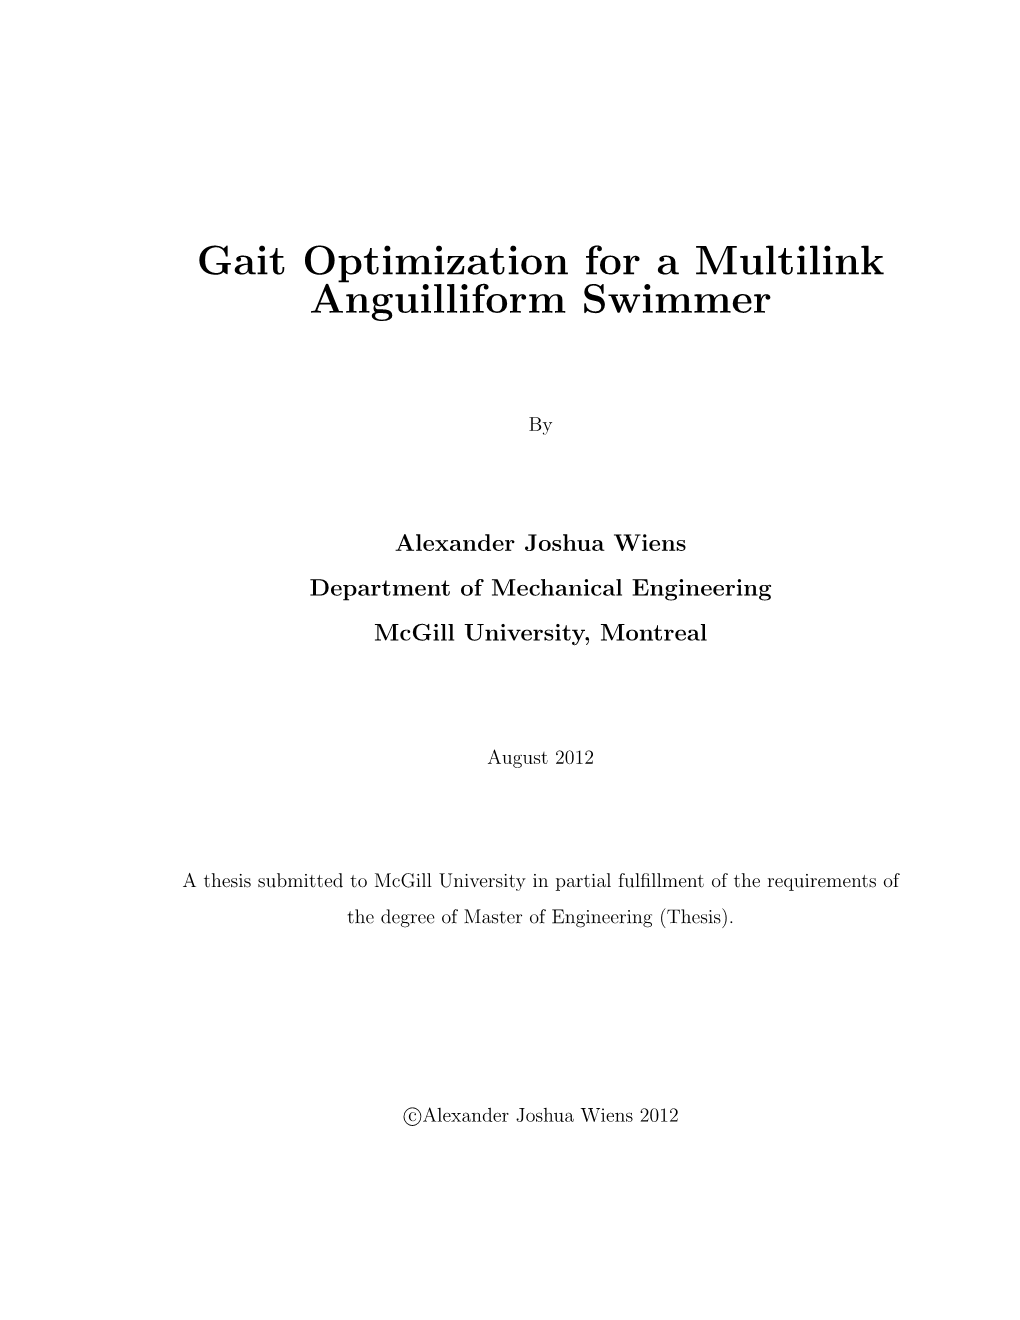 Gait Optimization for a Multilink Anguilliform Swimmer